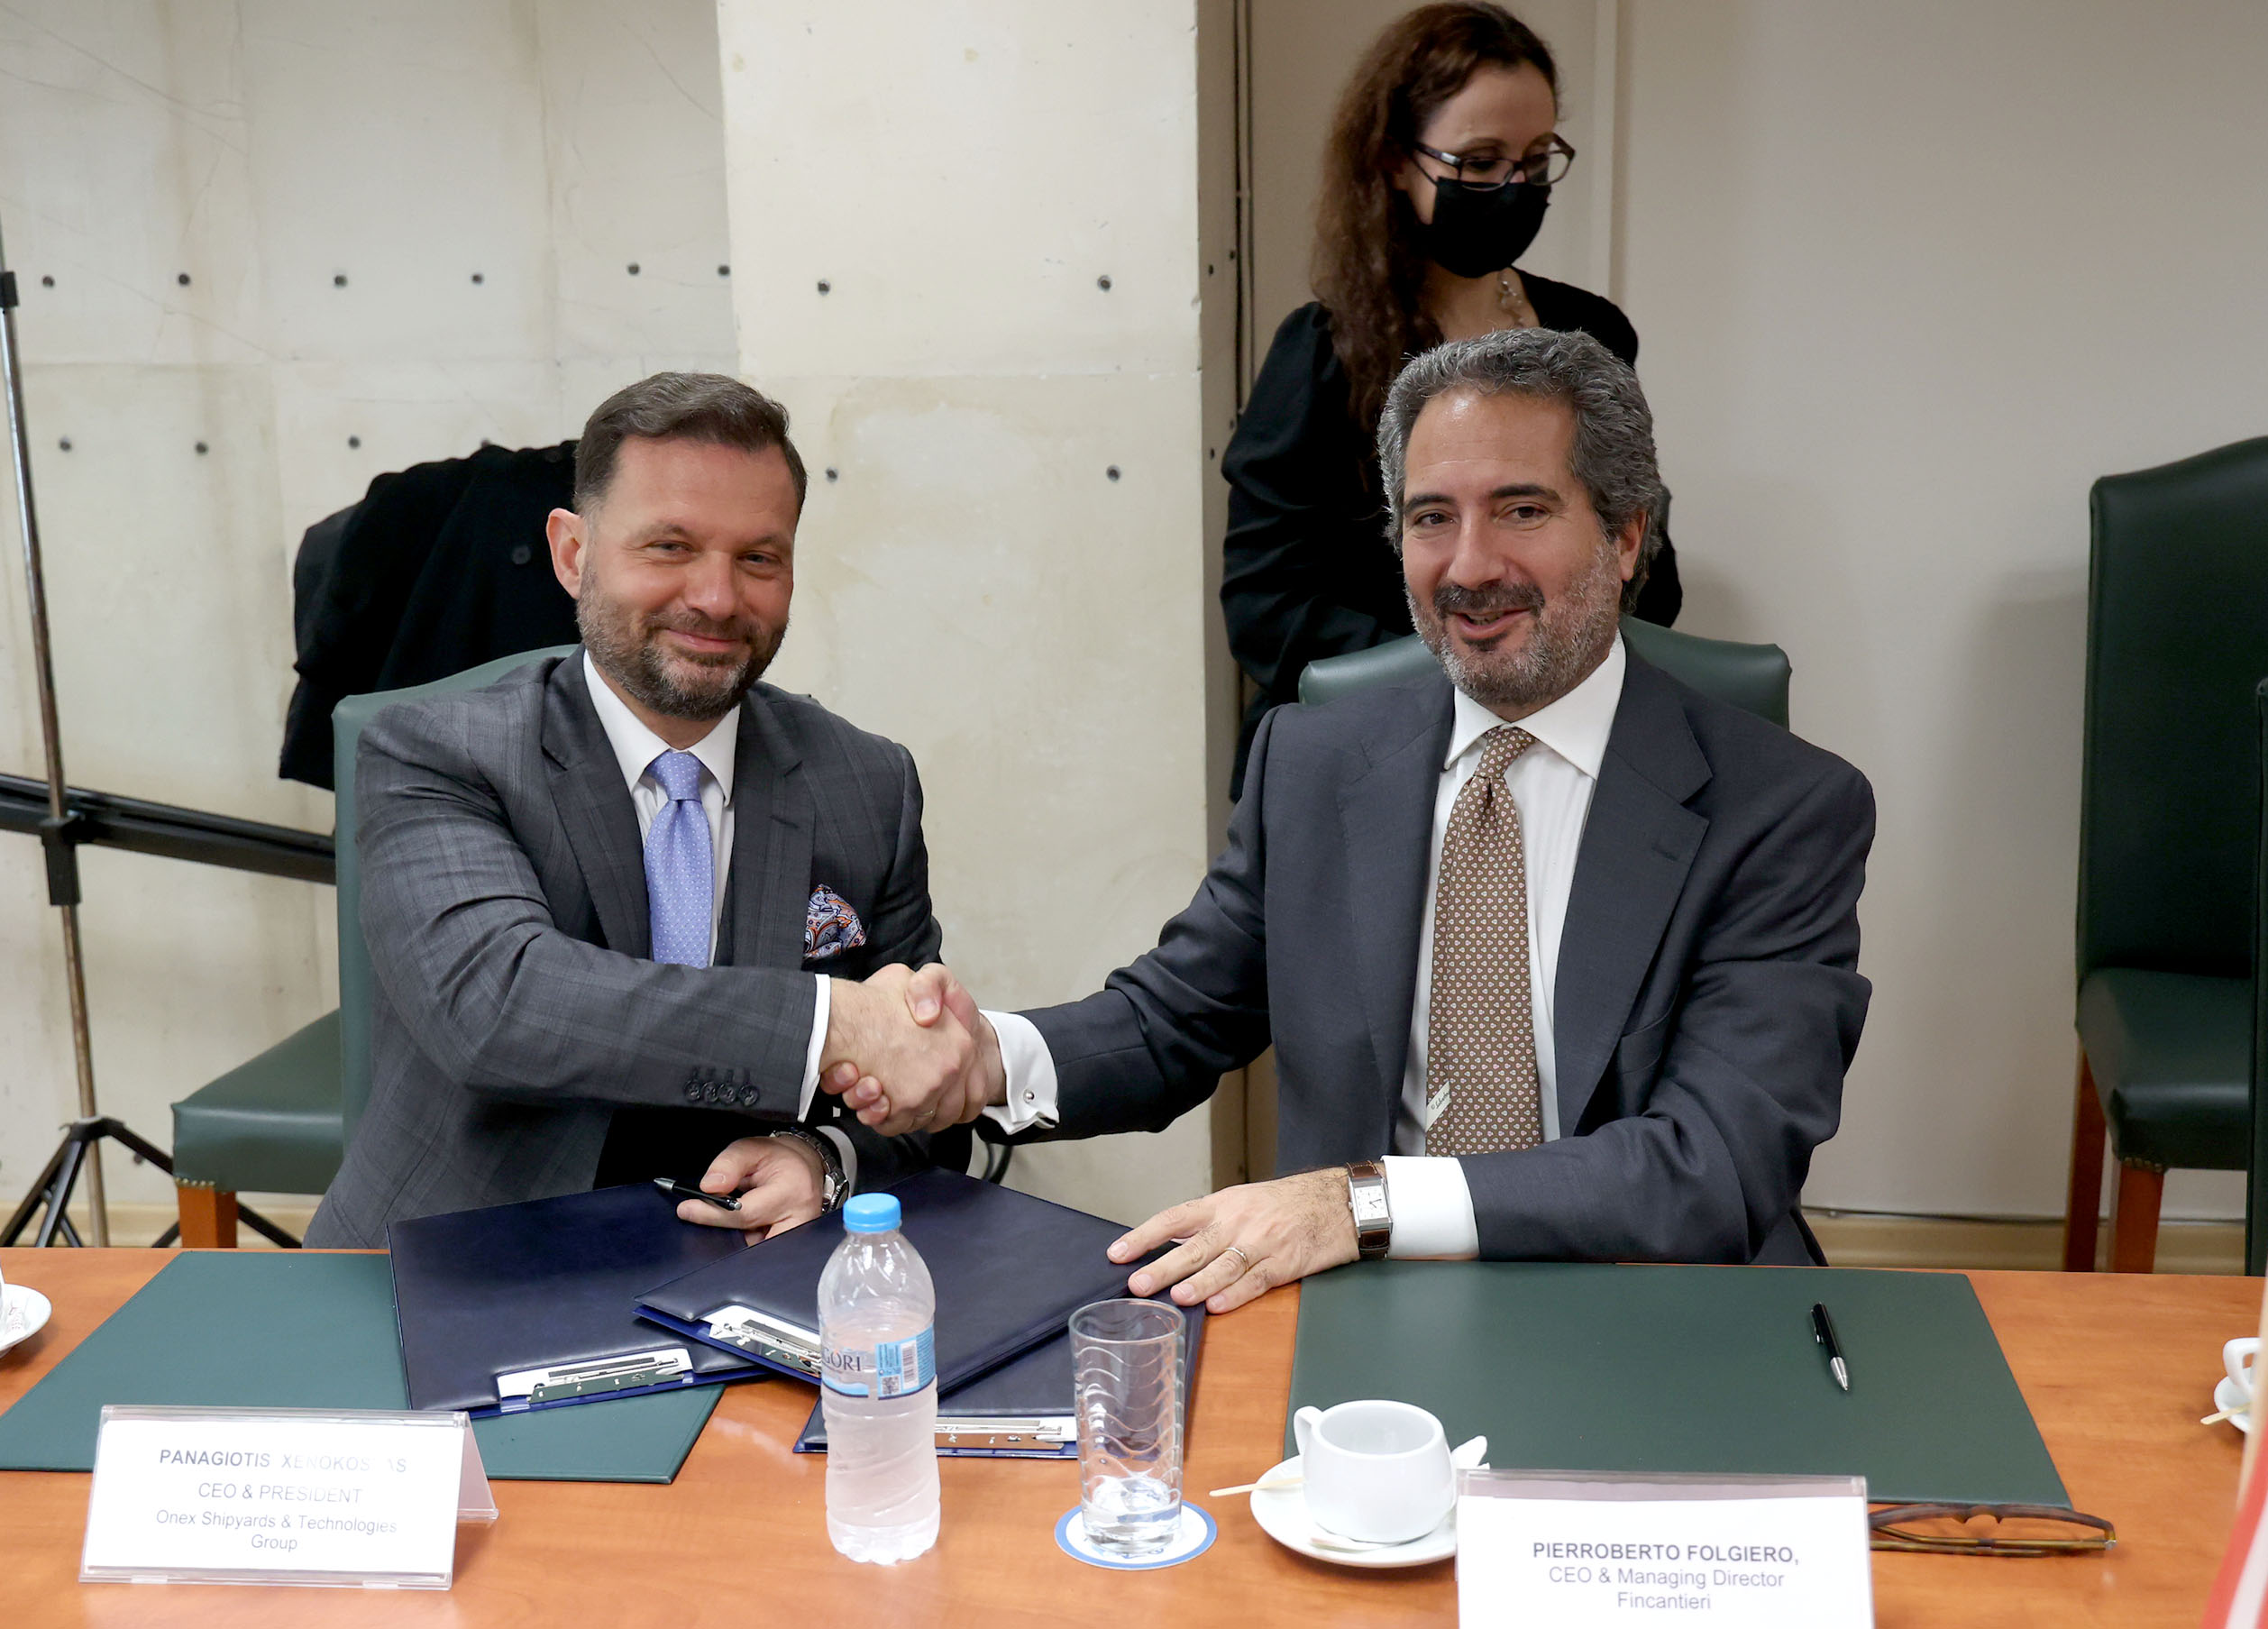 Pierroberto Folgiero, Amministratore Delegato di Fincantieri con Panos Xenokostas, Presidente e Amministratore delegato di ONEX Shipyards & Technologies Group